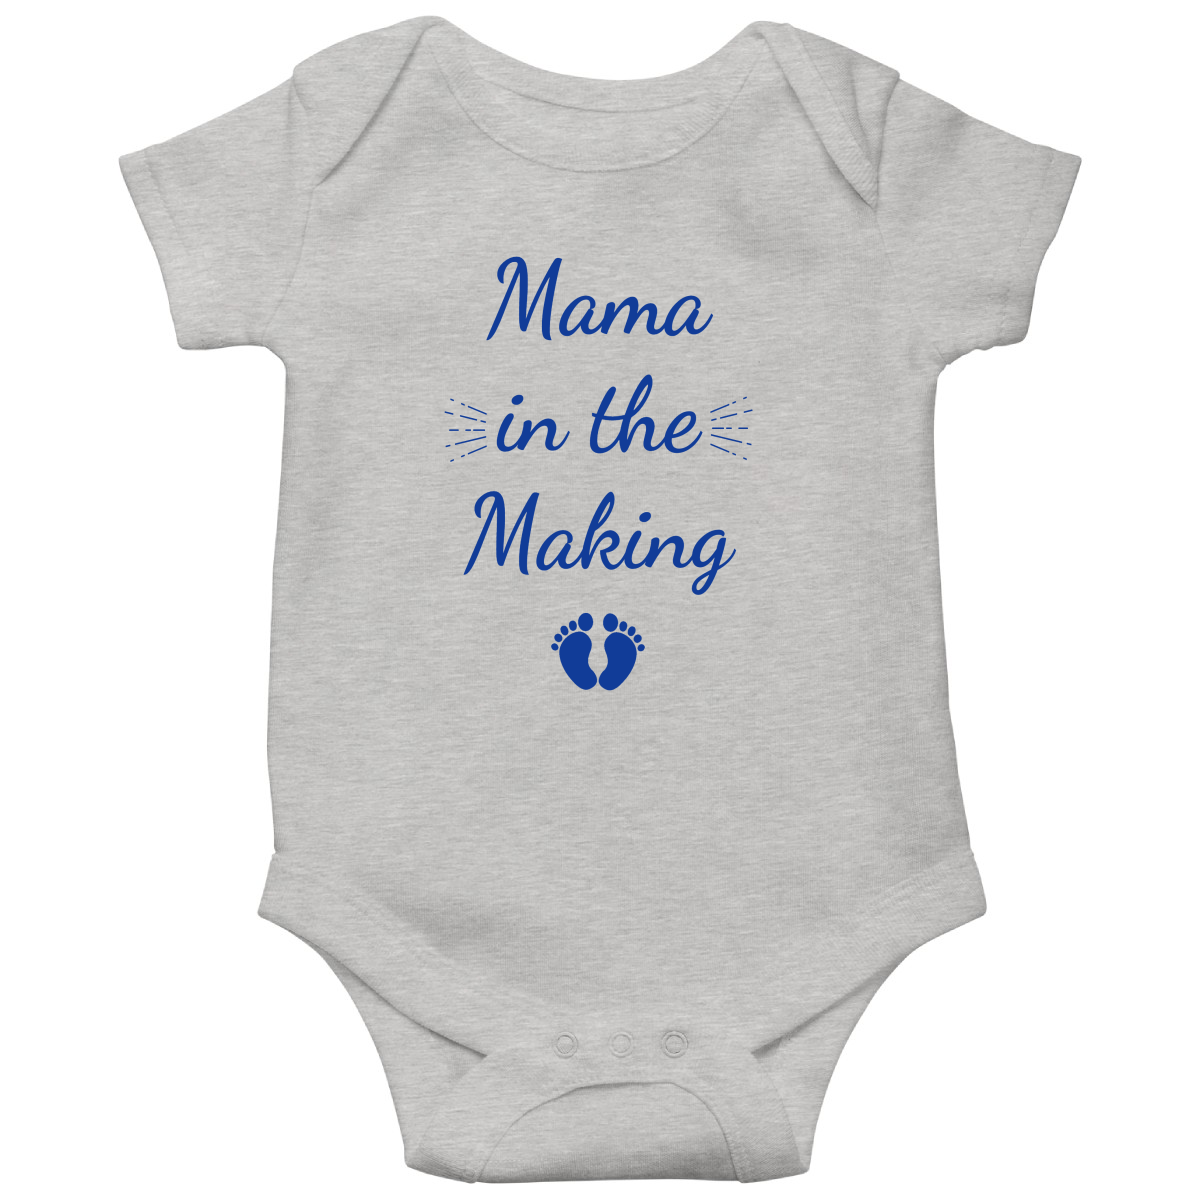 Mama in the Making Shirt Baby Bodysuits | Gray